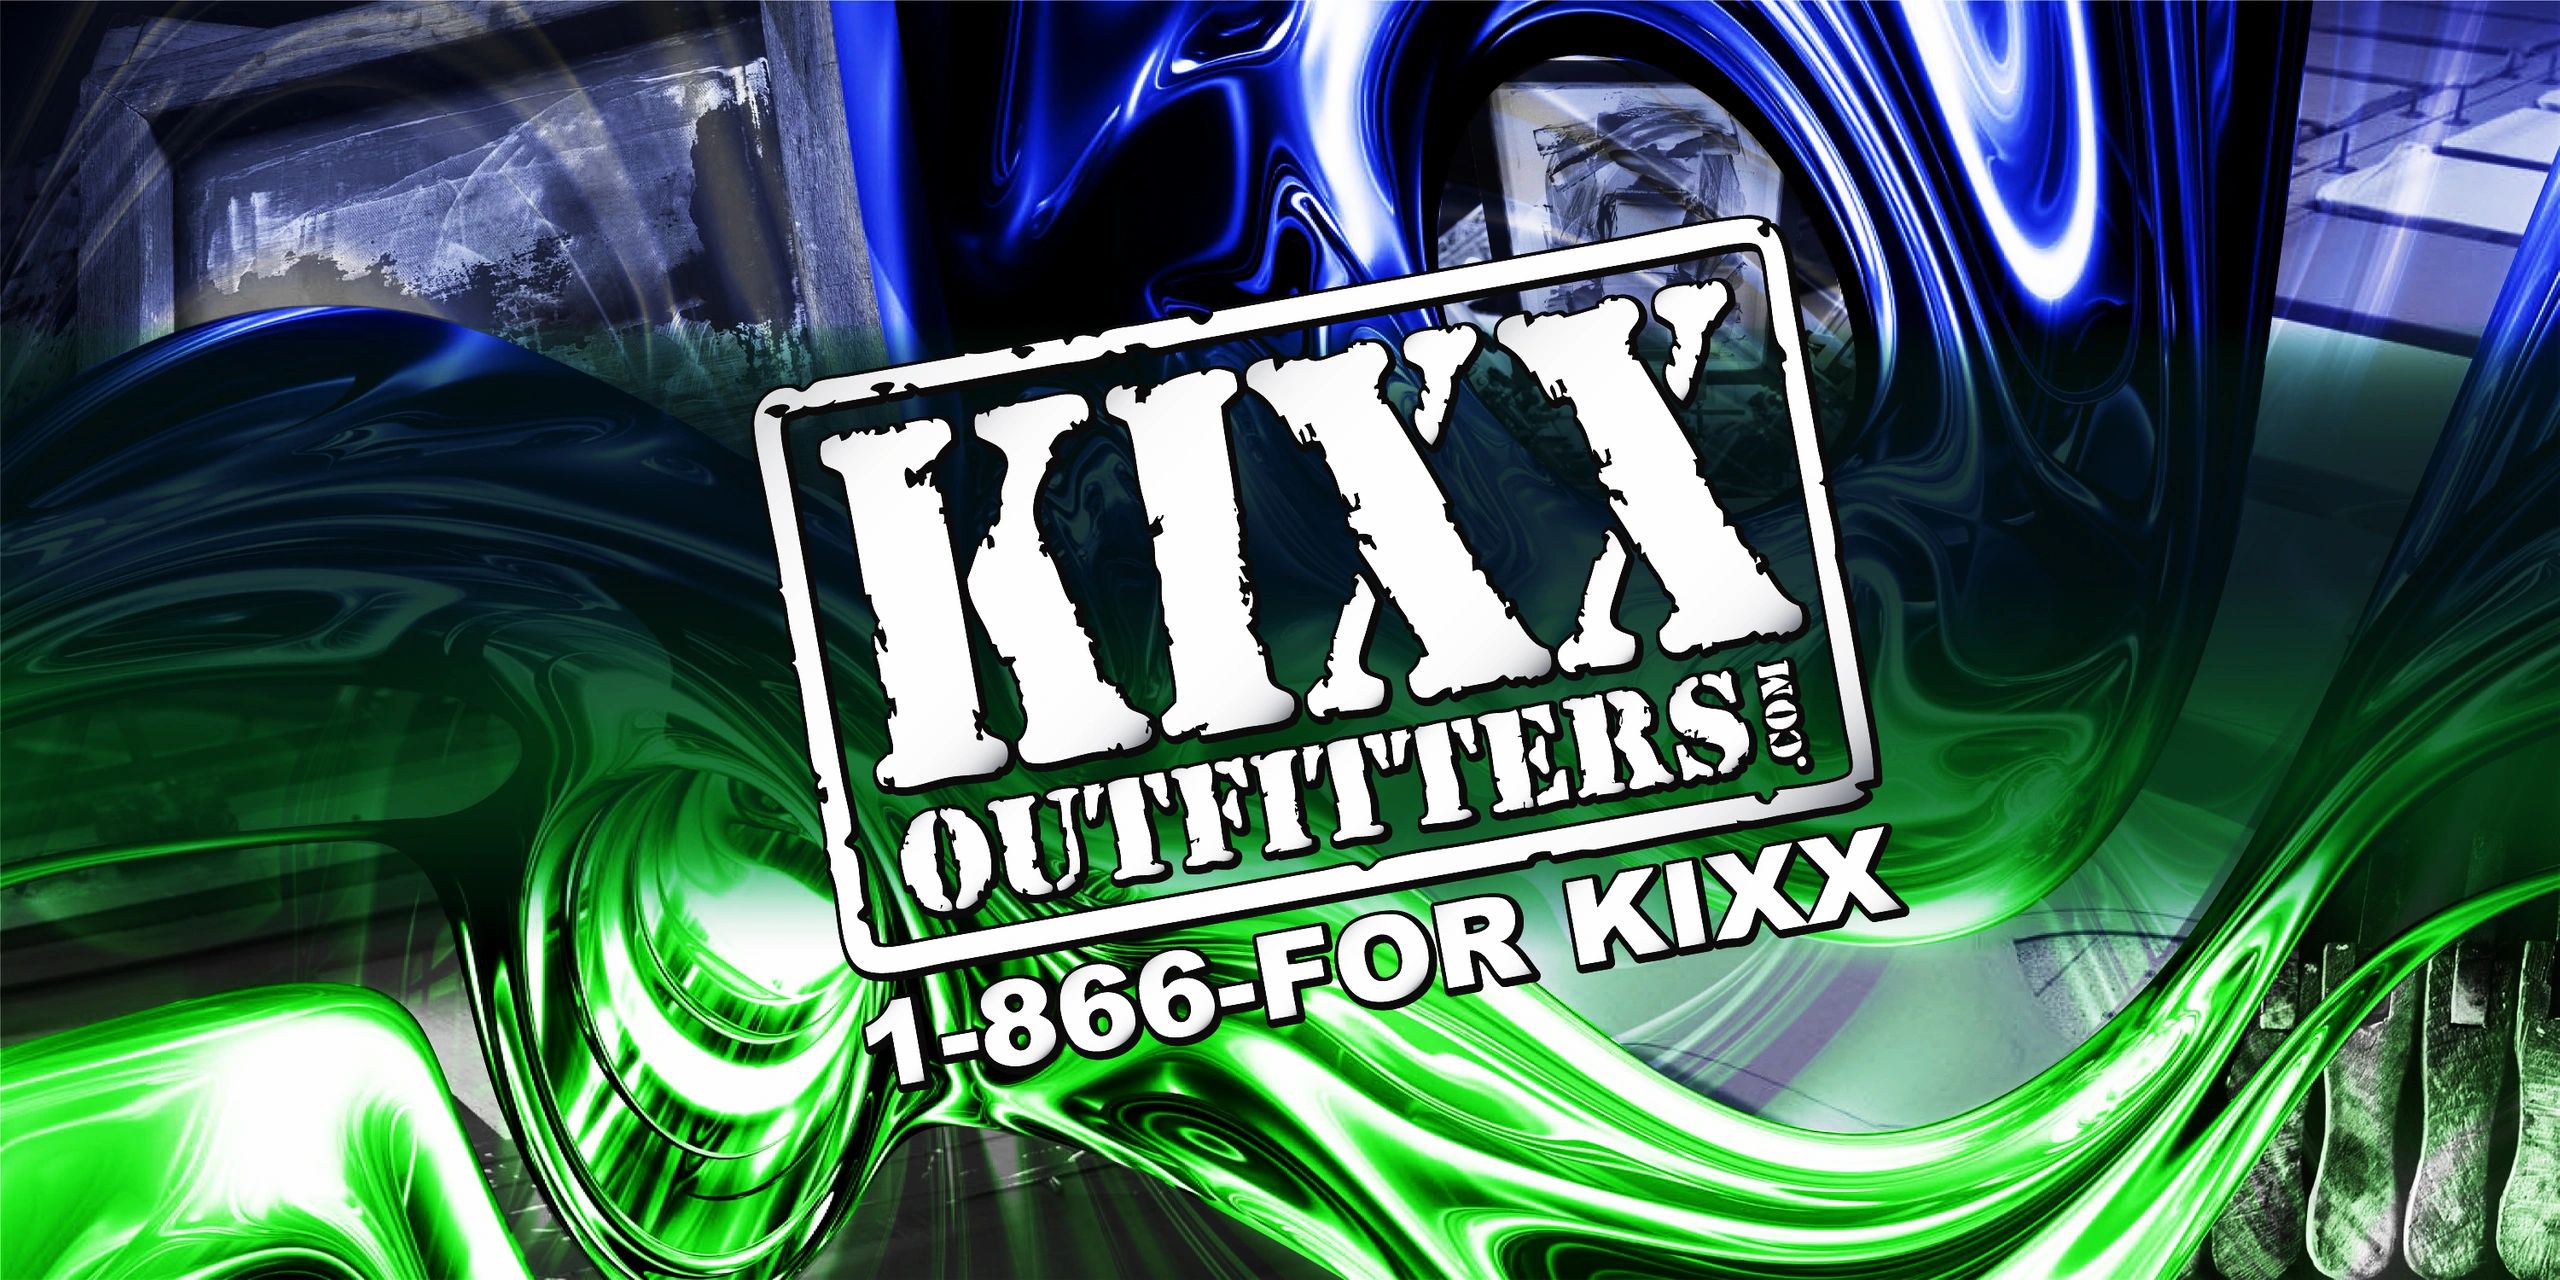 Kixx Builders Inc